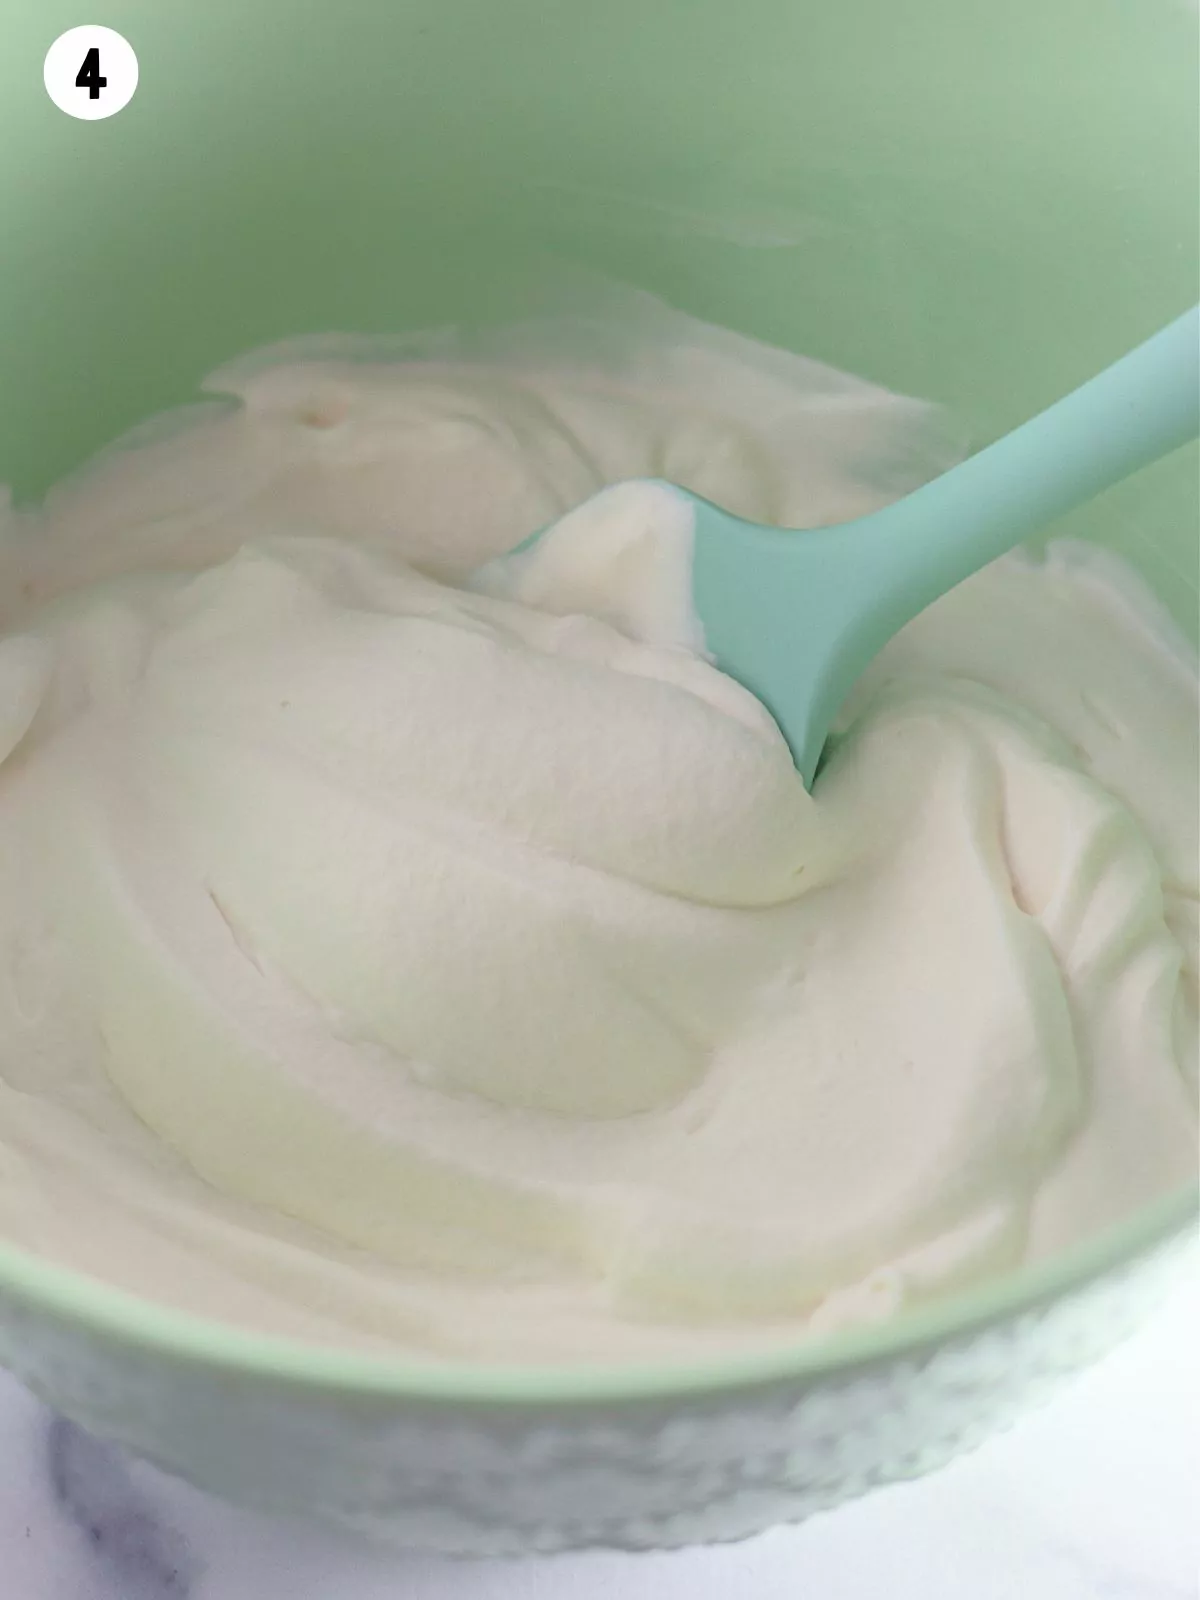 Homemade whipped cream in bowl.